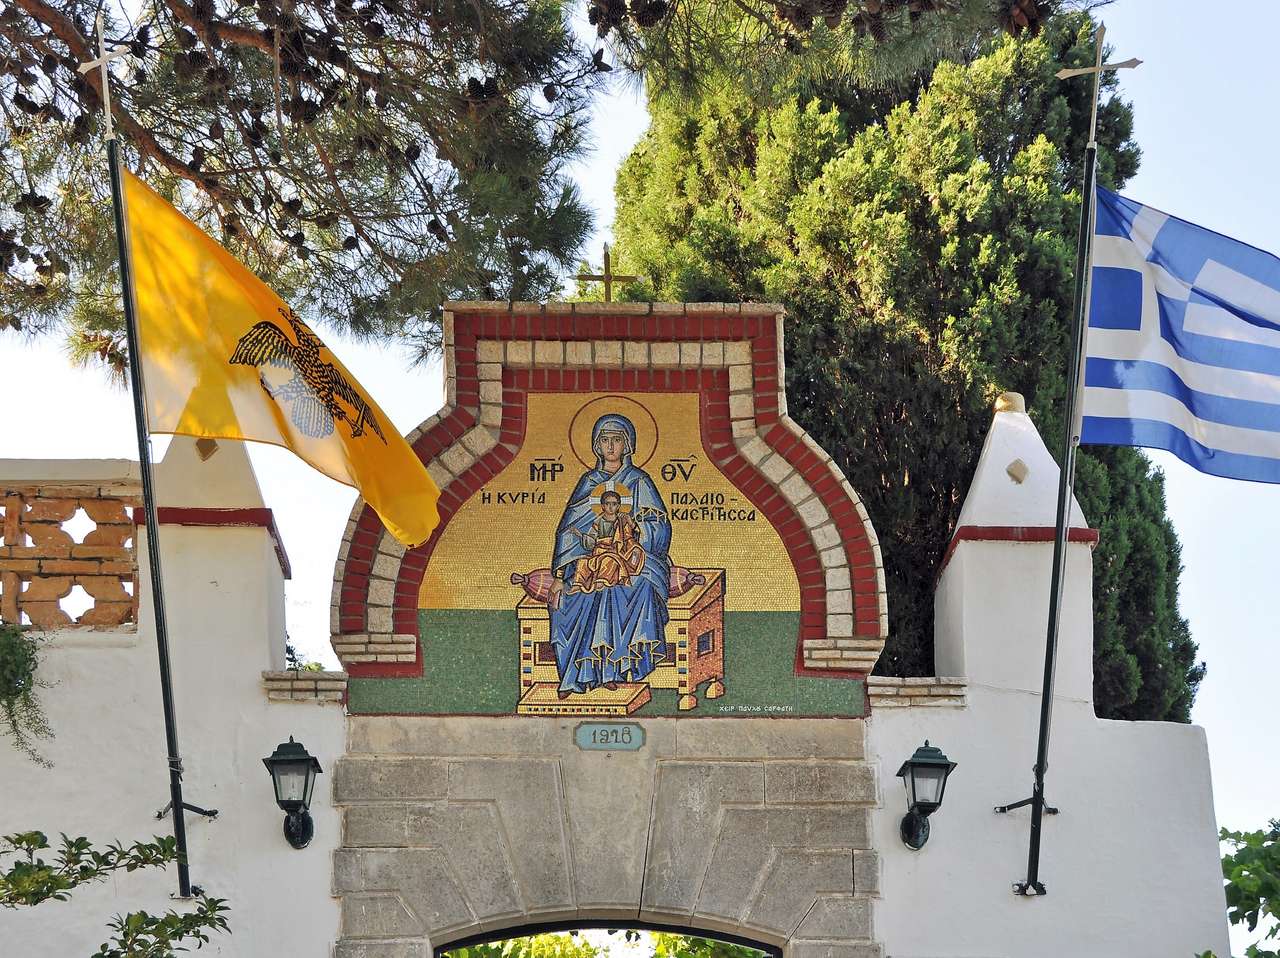 Paleokastritsa-klooster op Corfu legpuzzel online